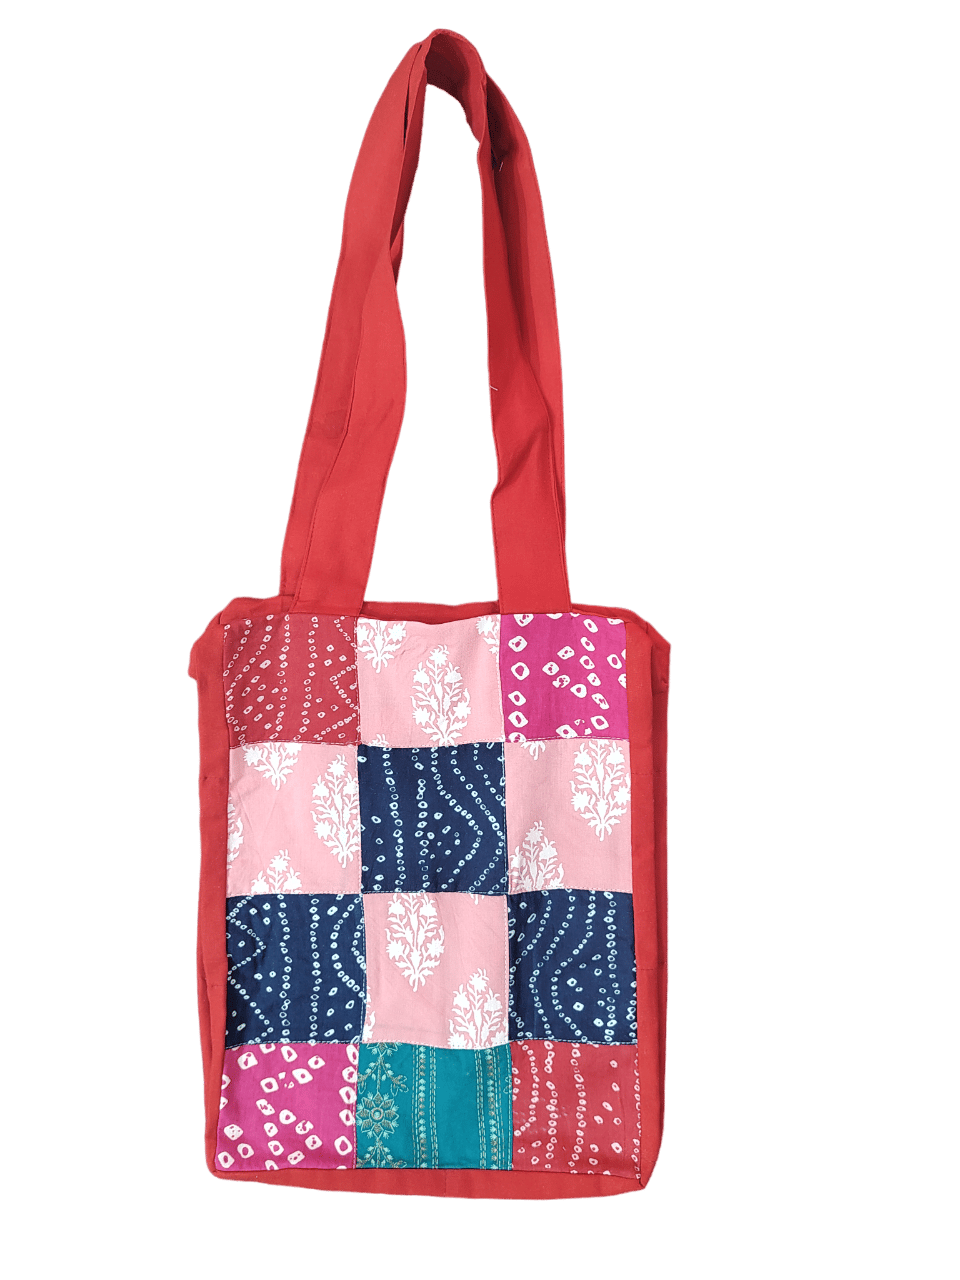 NIRJHARI Handmade Cotton Cloth Patchwork Handbag Pink & Green (Big) Pack of 1